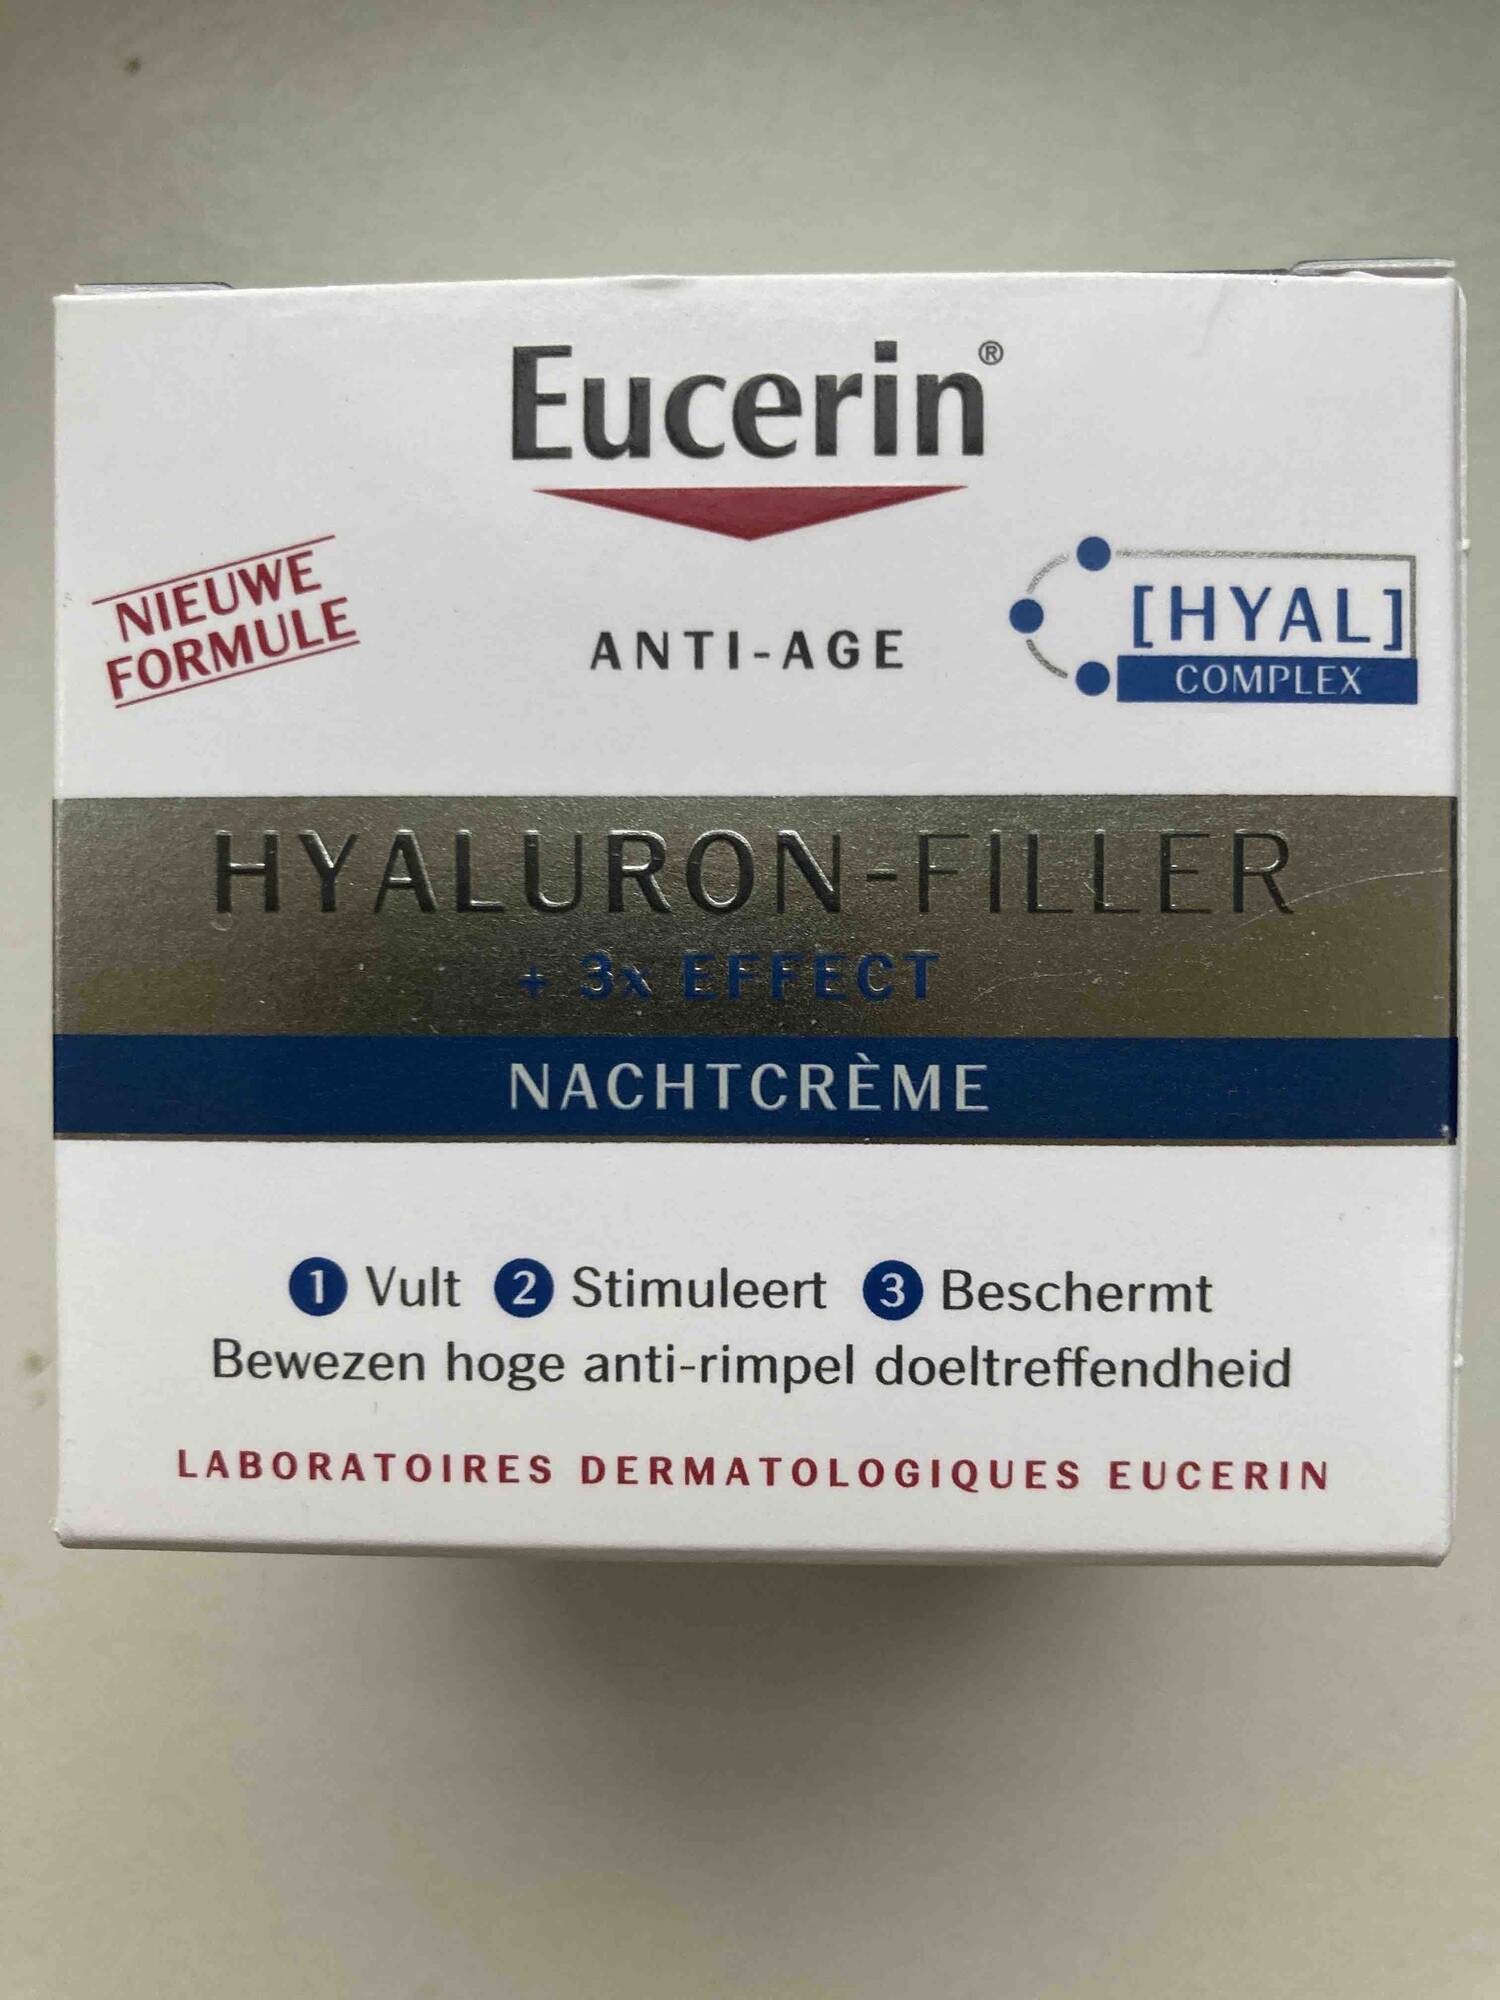 EUCERIN - Hyaluron-filler +3x effect - Nachtcrème